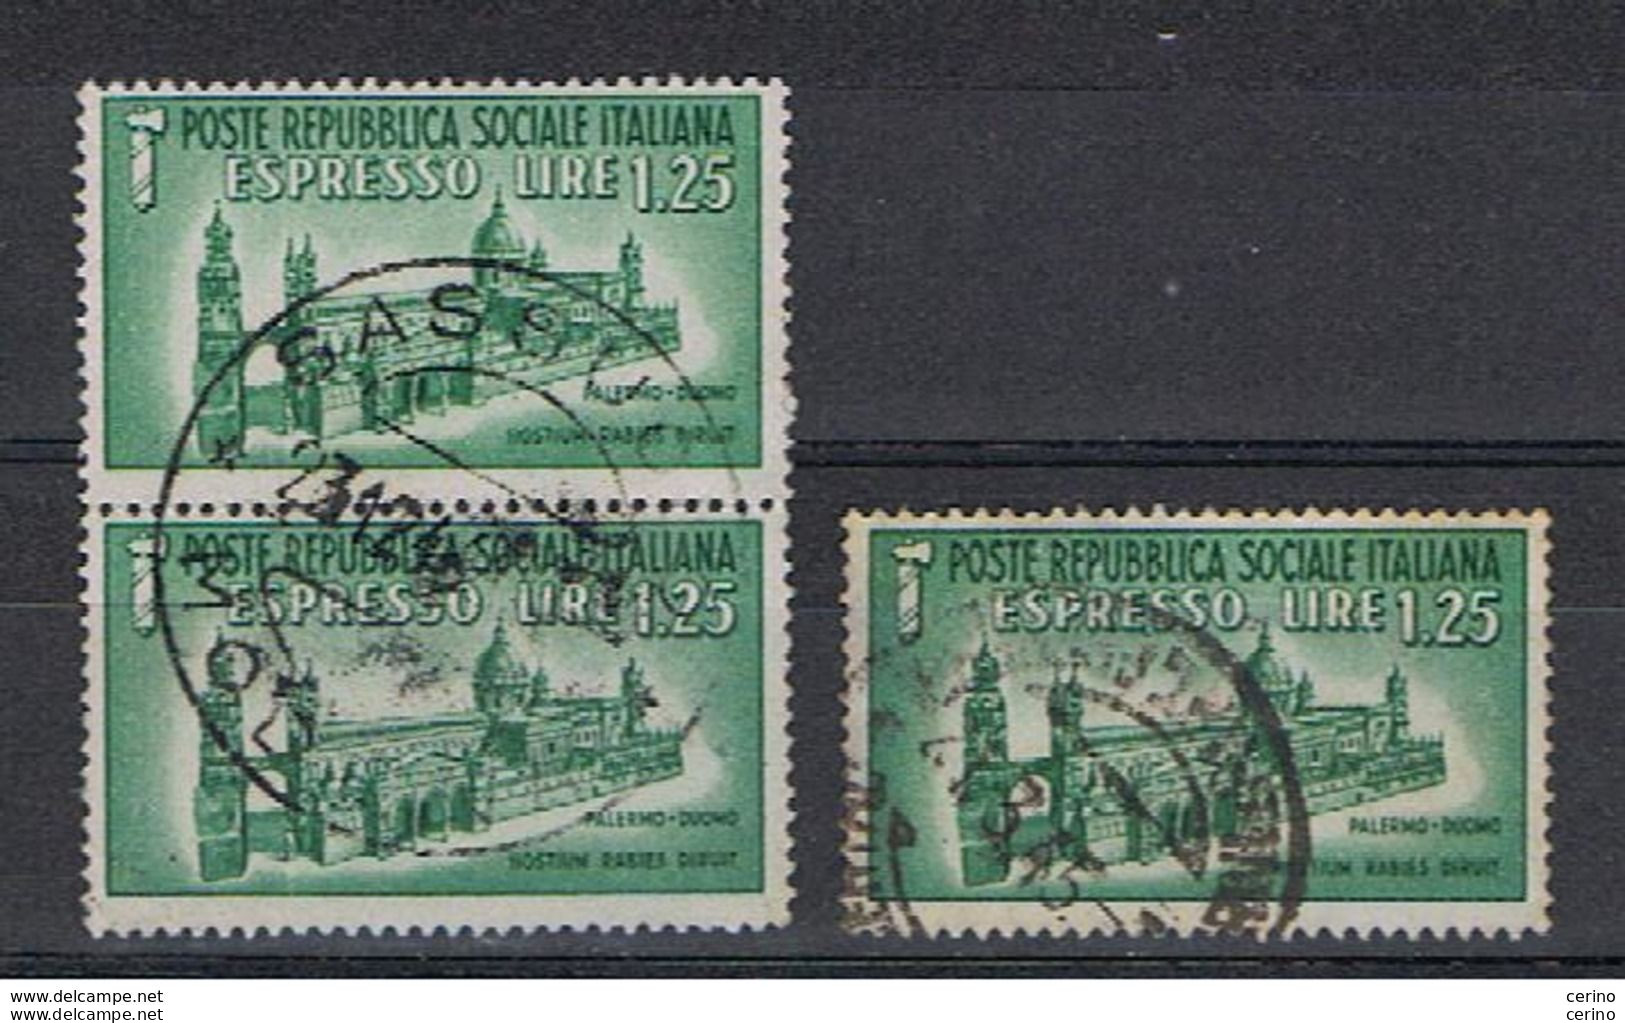 R.S.I.:  1944  EX. DUOMO  DI  PALERMO  -  £. 1,25  VERDE US. -  RIPETUTO  3  VOLTE  -  SASS. 23 - Express Mail